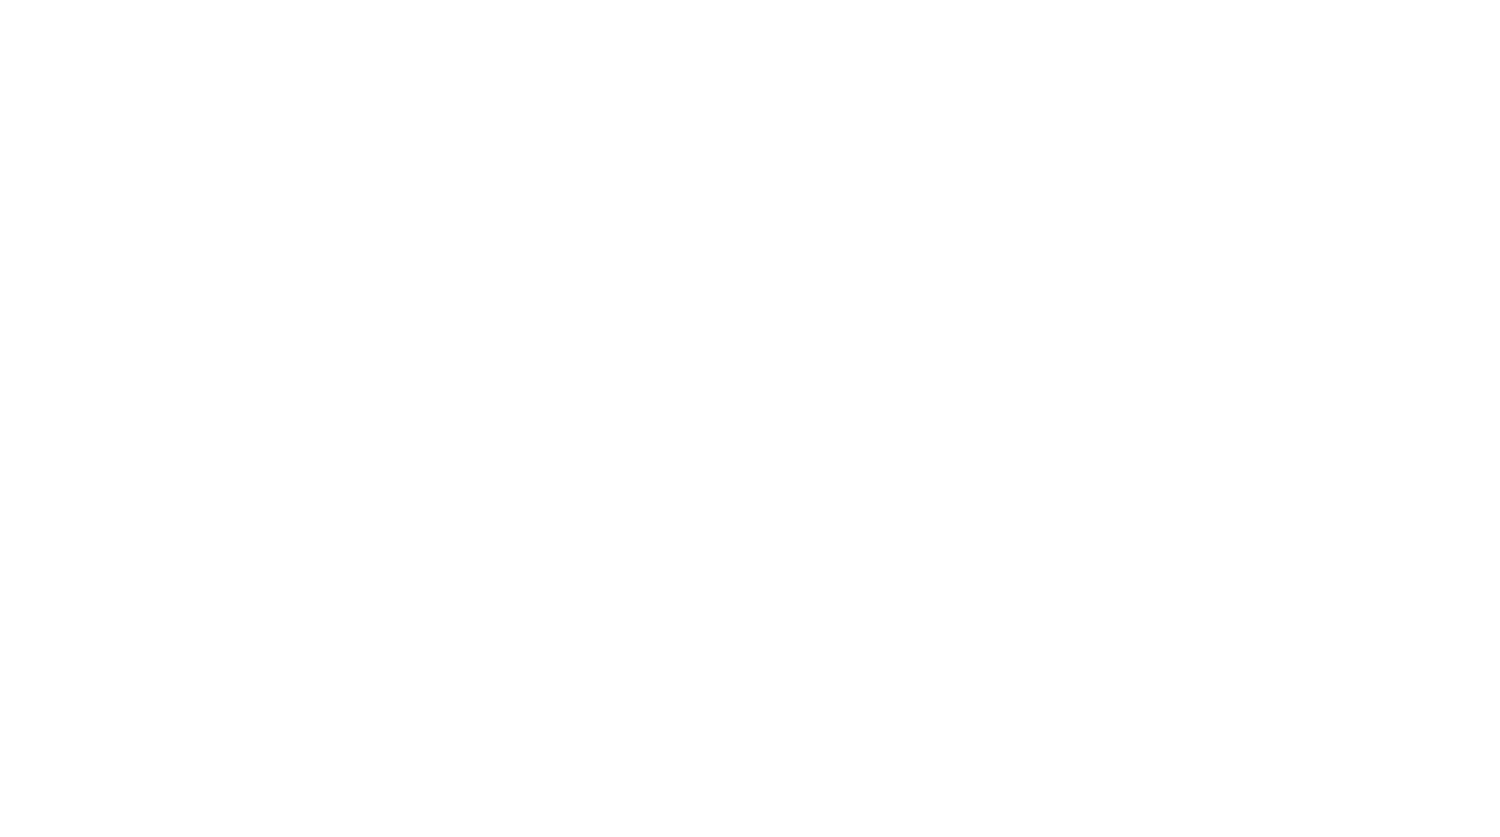 Victoria Matthews Psychotherapy